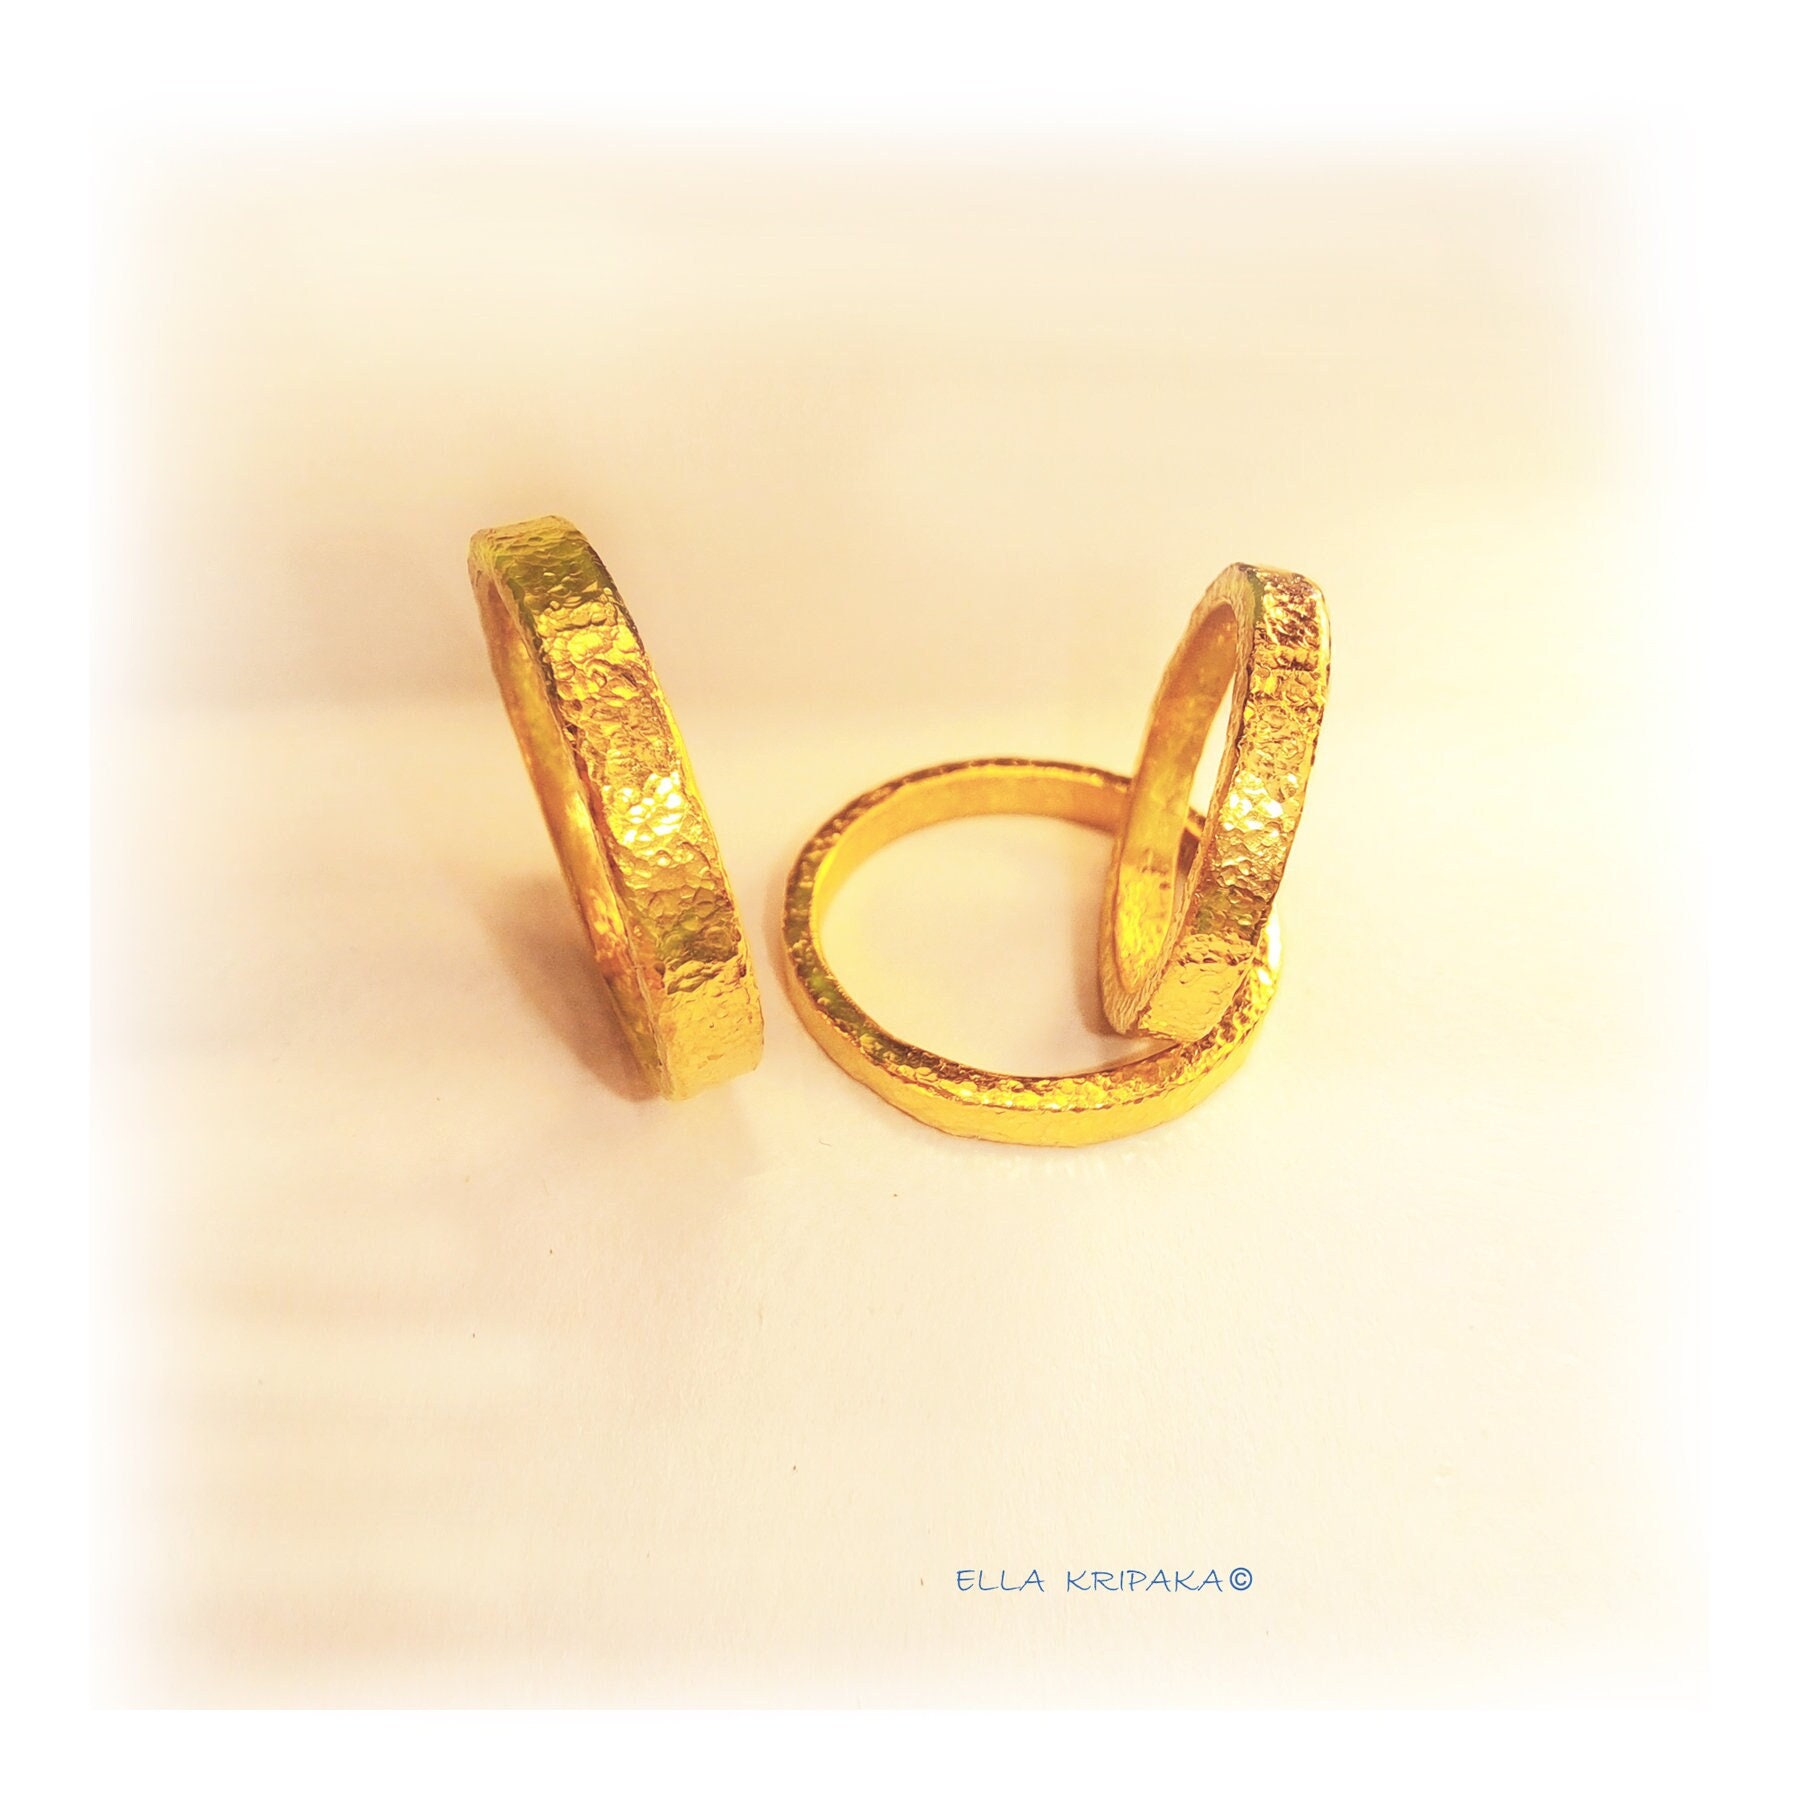 22k Gold Ring Designs With Price | 3 Gram Gold Ring Price 2021 |  Lightweight Gold Rings Women - YouTube Please … | Gold ring designs, Gold  ring price, 22k gold ring